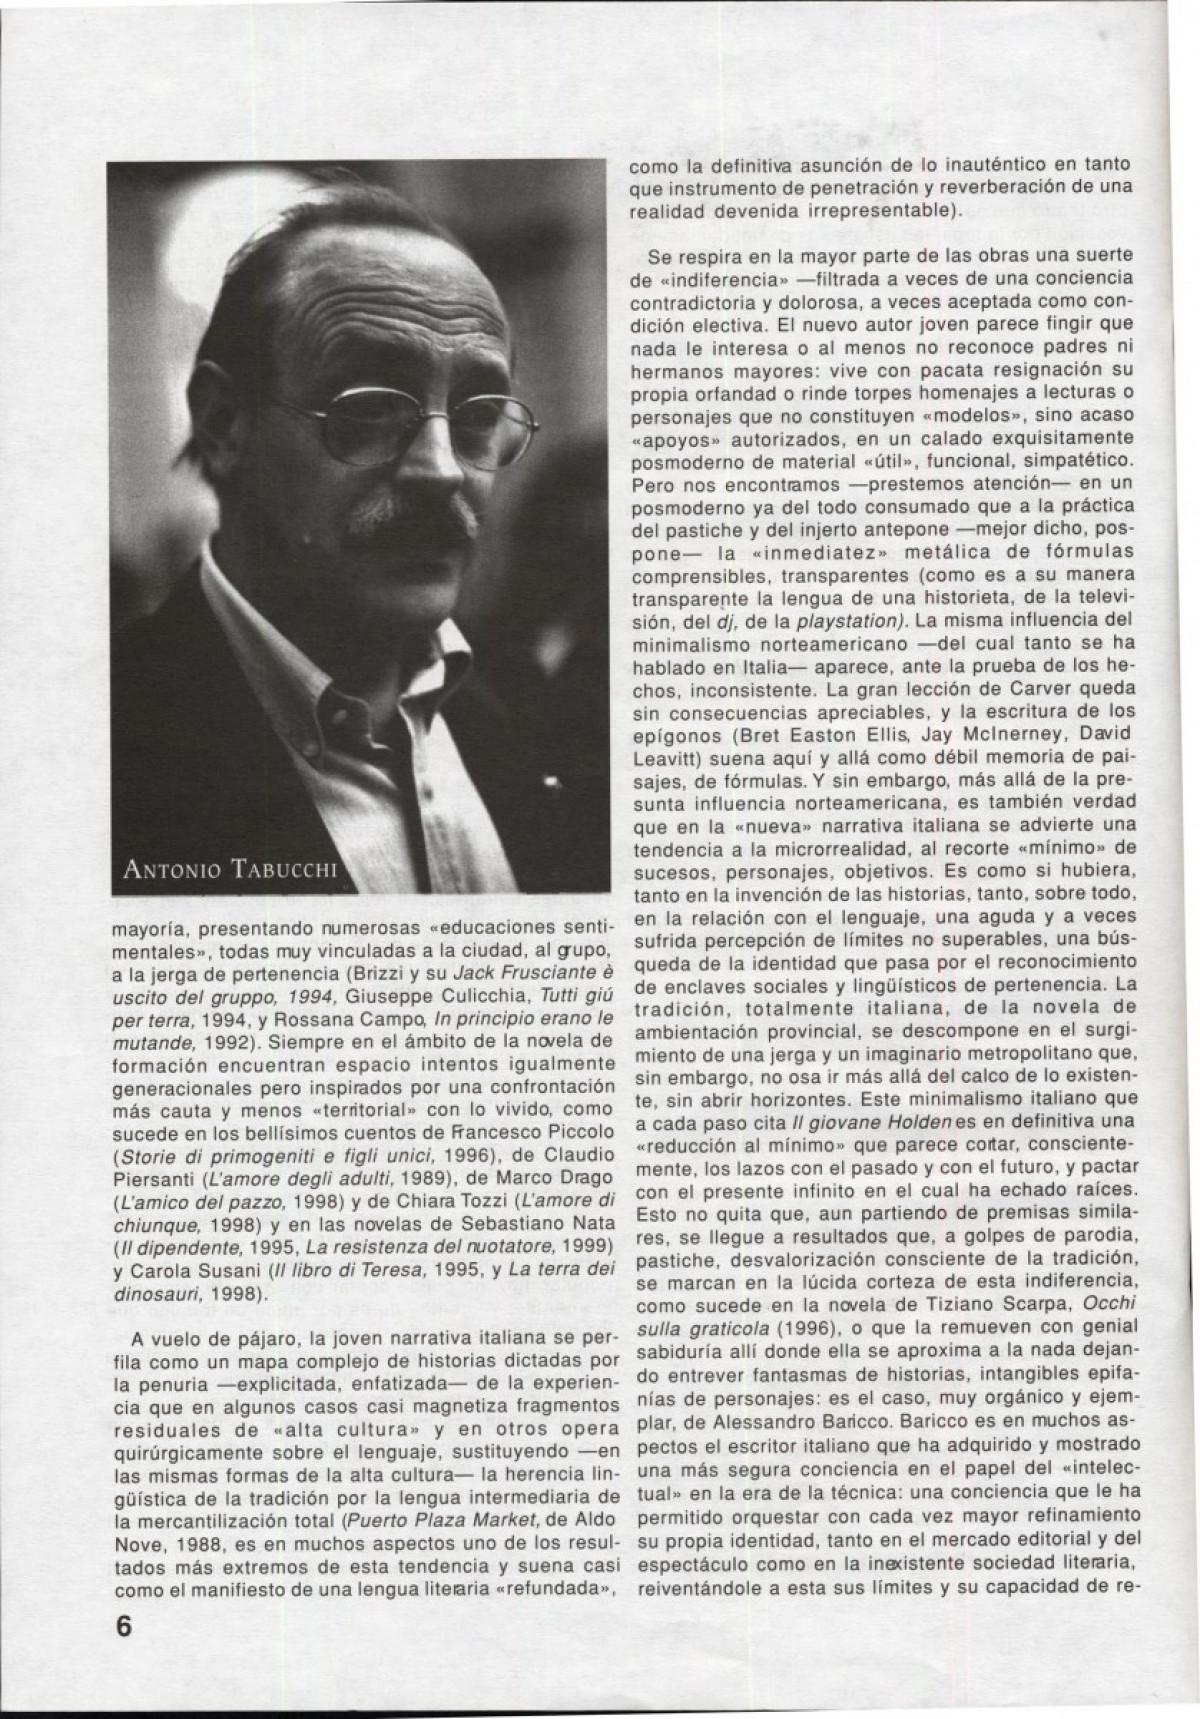 2000 - Italian Writers - Union